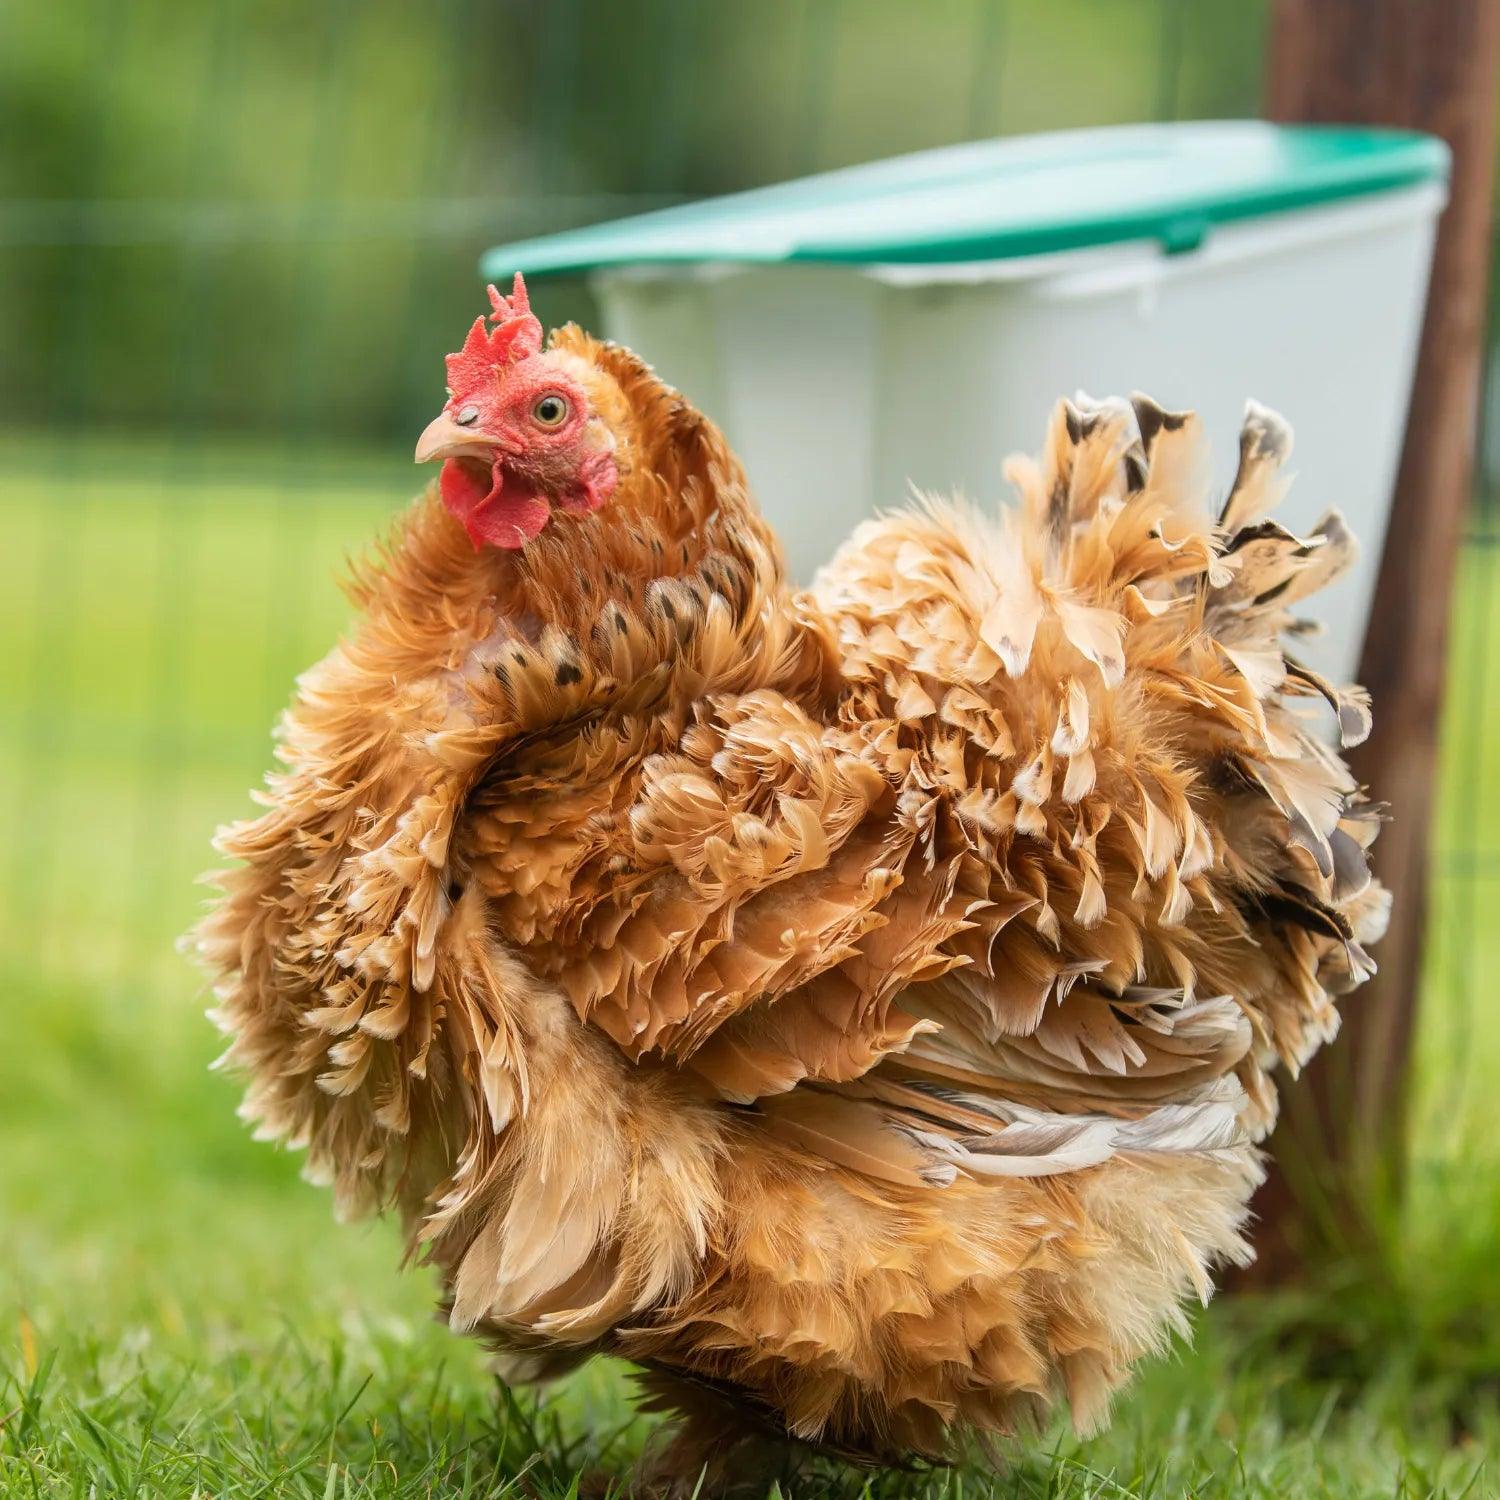 V-Feedr No Waste Voerbak 2.5kg , beste voerbak voor kippen, geen verspilling van voer, V-Feedr No Waste Feeder 2.5kg, voerbak voor kippen